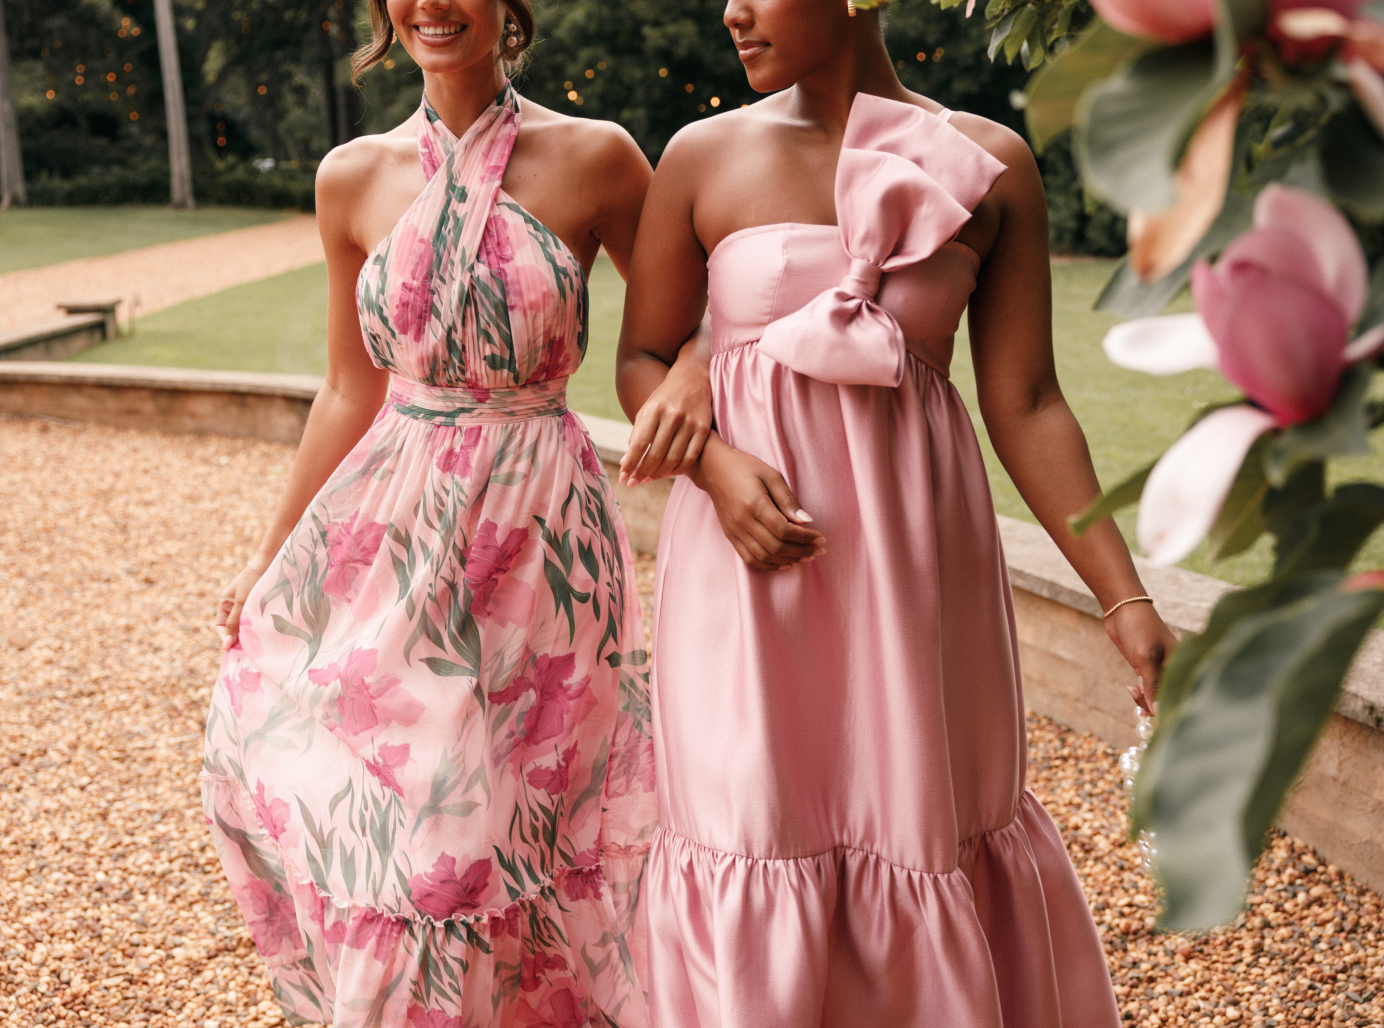 Designer Cocktail & Party Dresses | Neiman Marcus